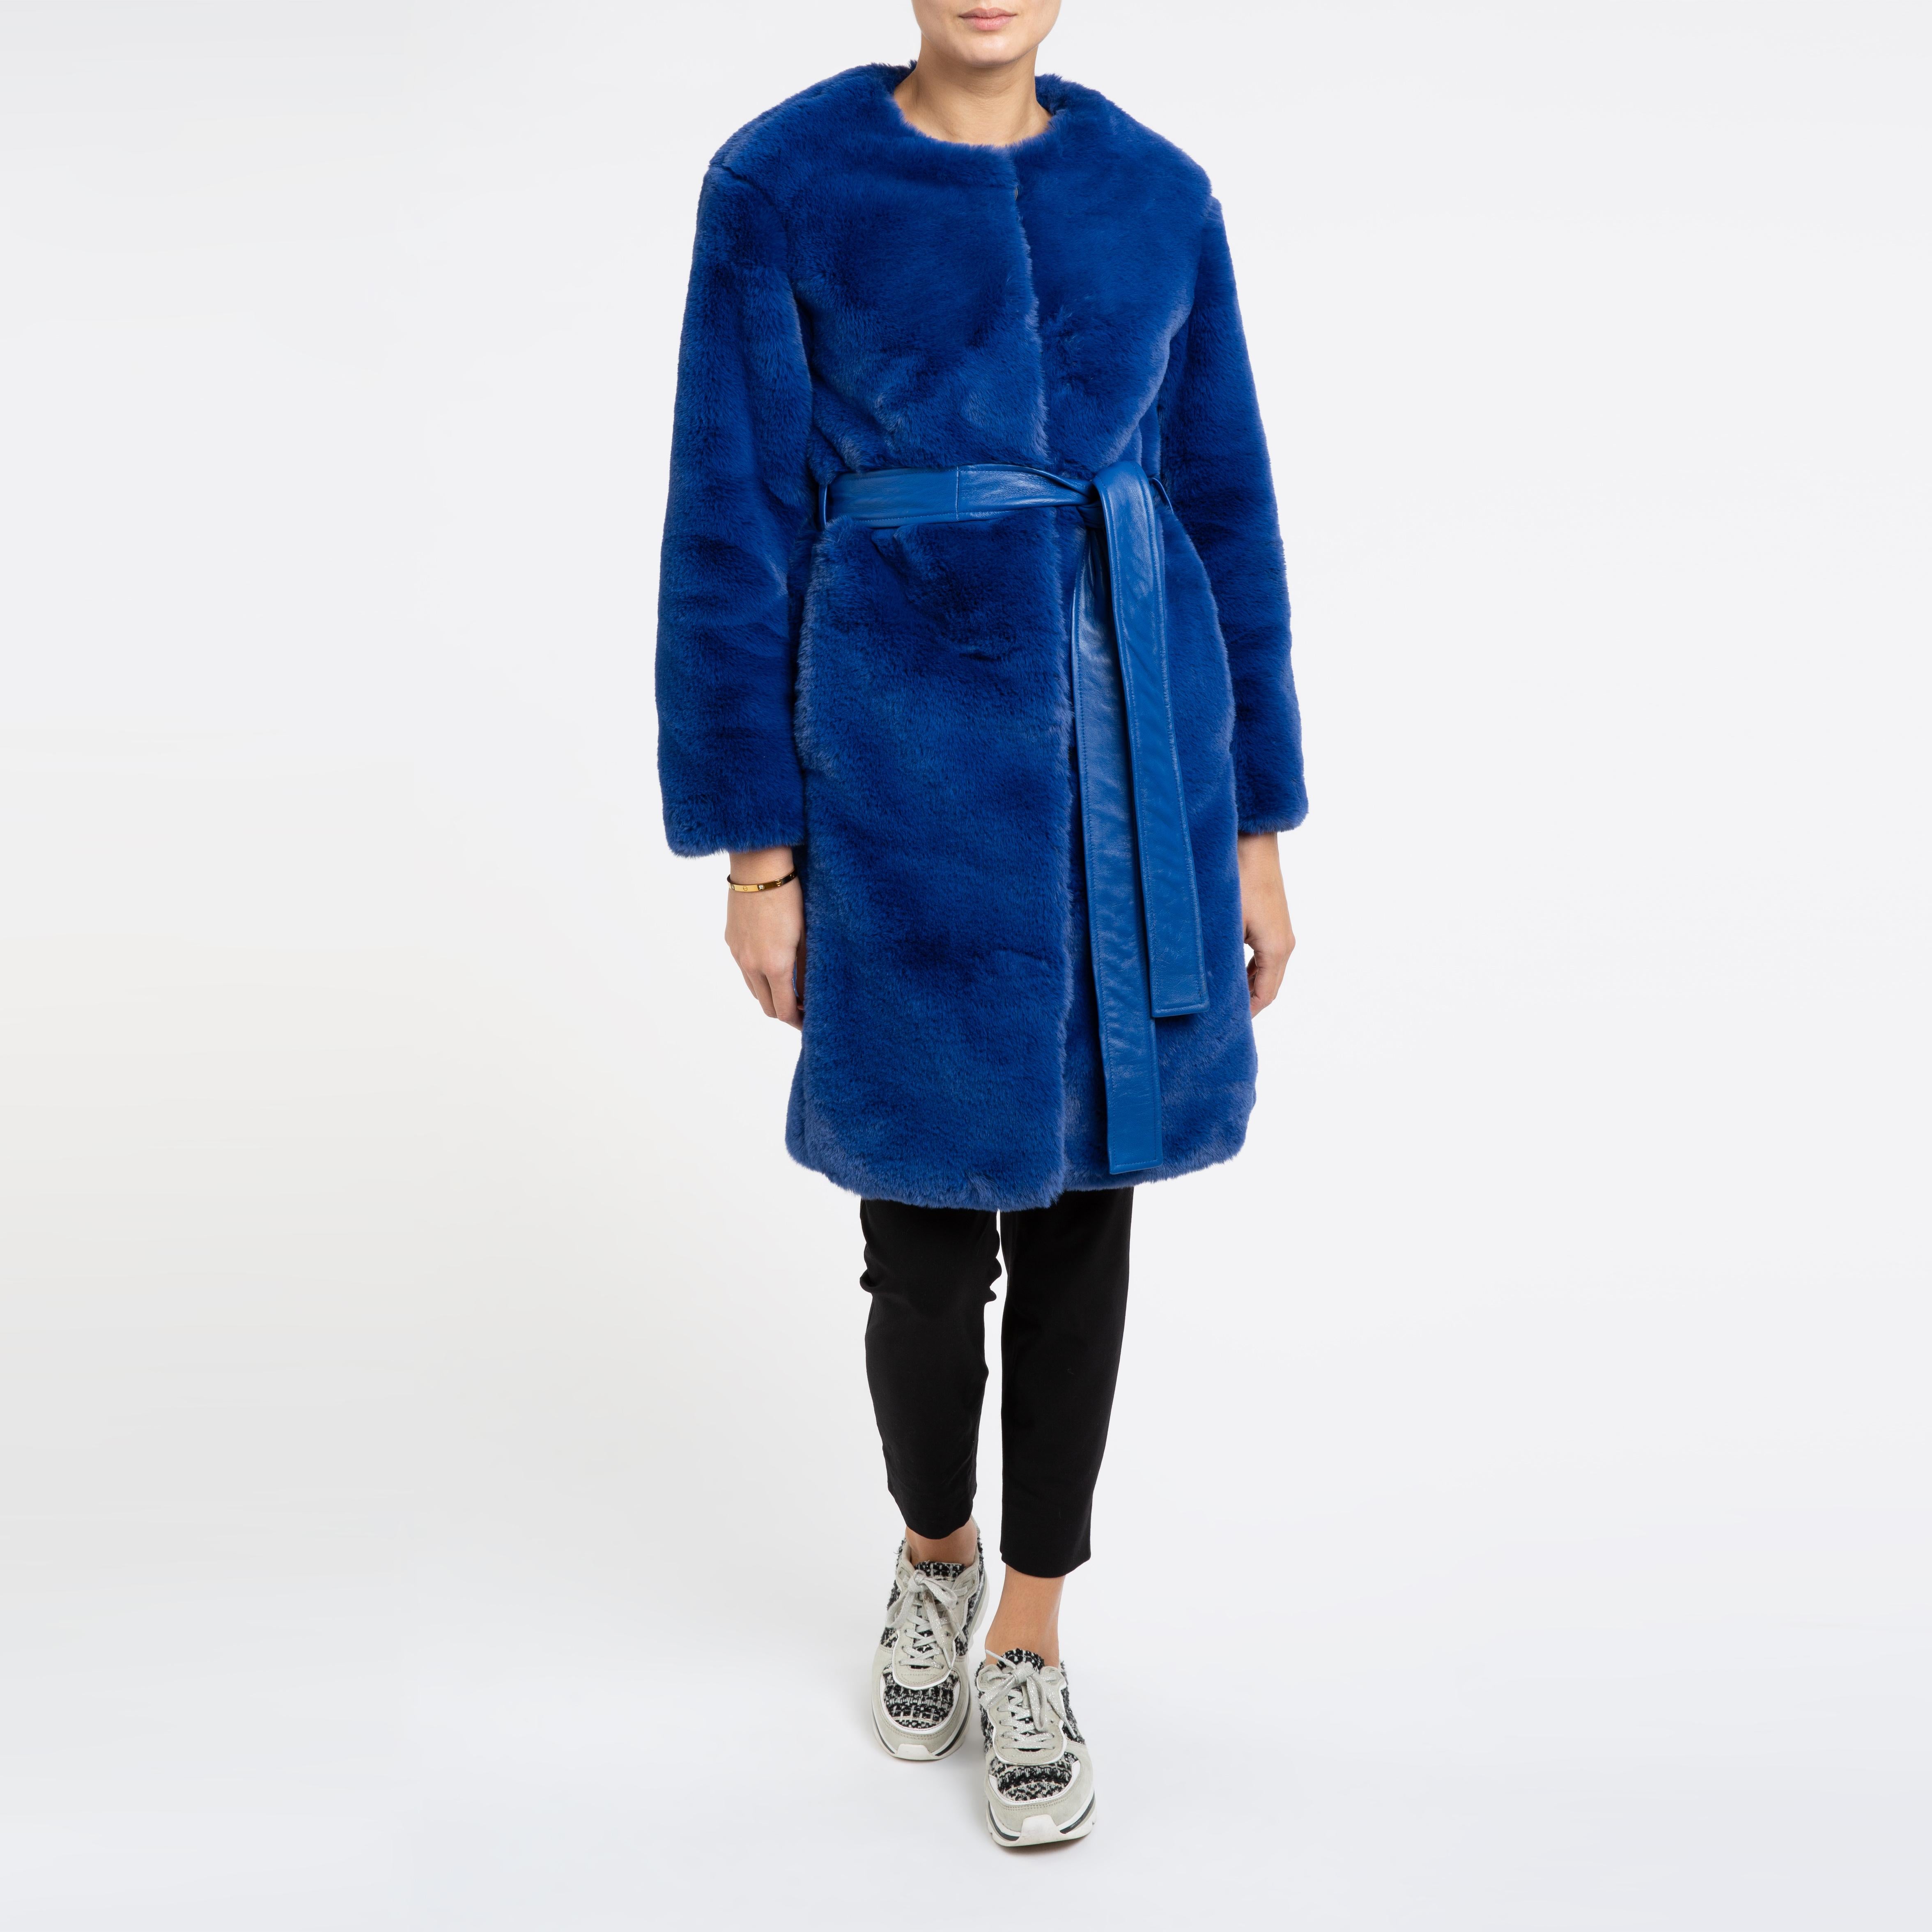 Verheyen London Serena  Collarless Faux Fur Coat in Blue - Size uk 6  For Sale 1